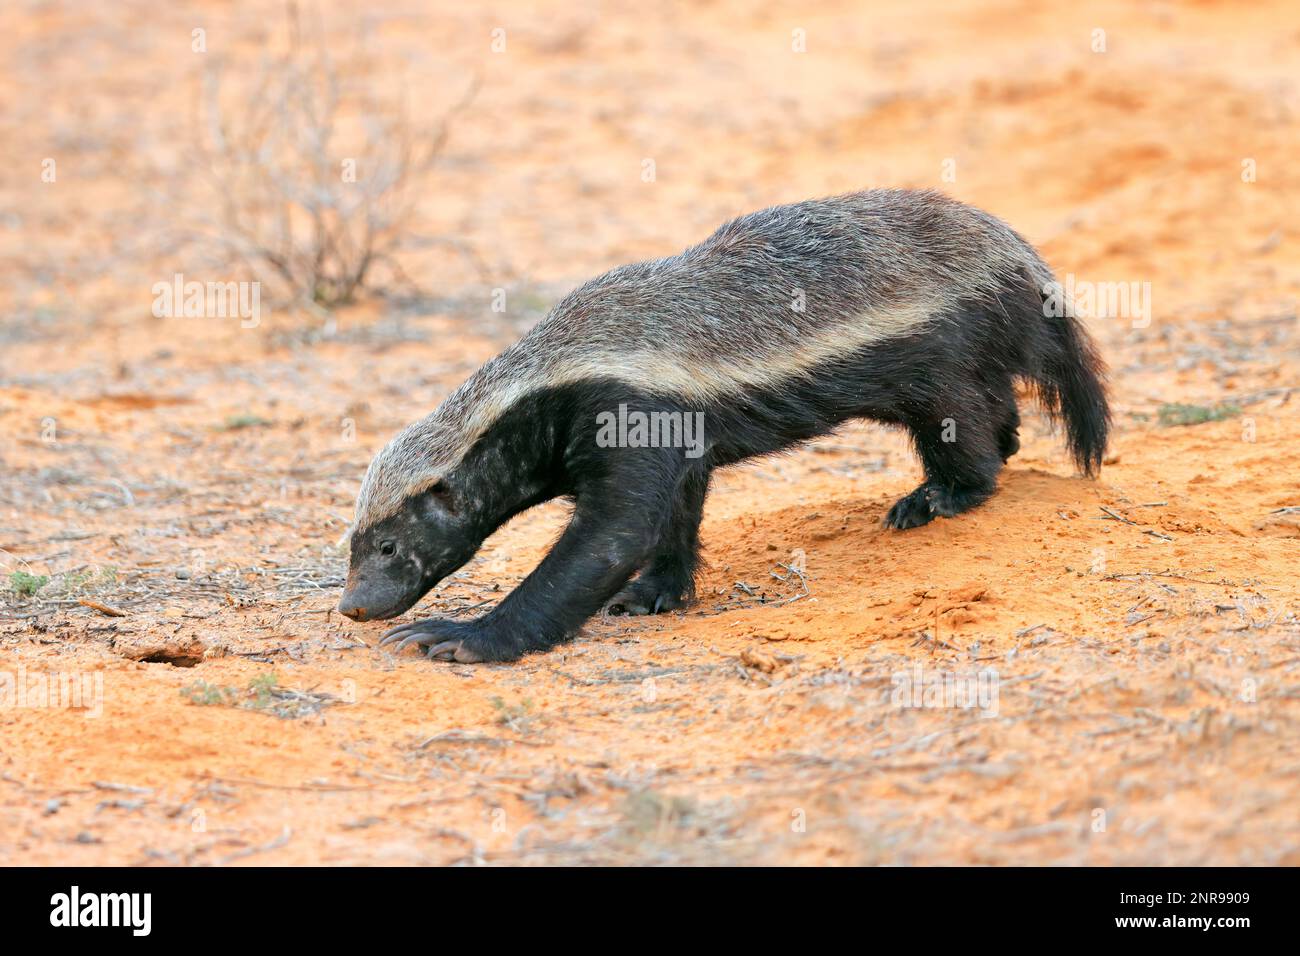 A honey badger (Mellivora capensis) in natural habitat, Kalahari desert, South Africa Stock Photo